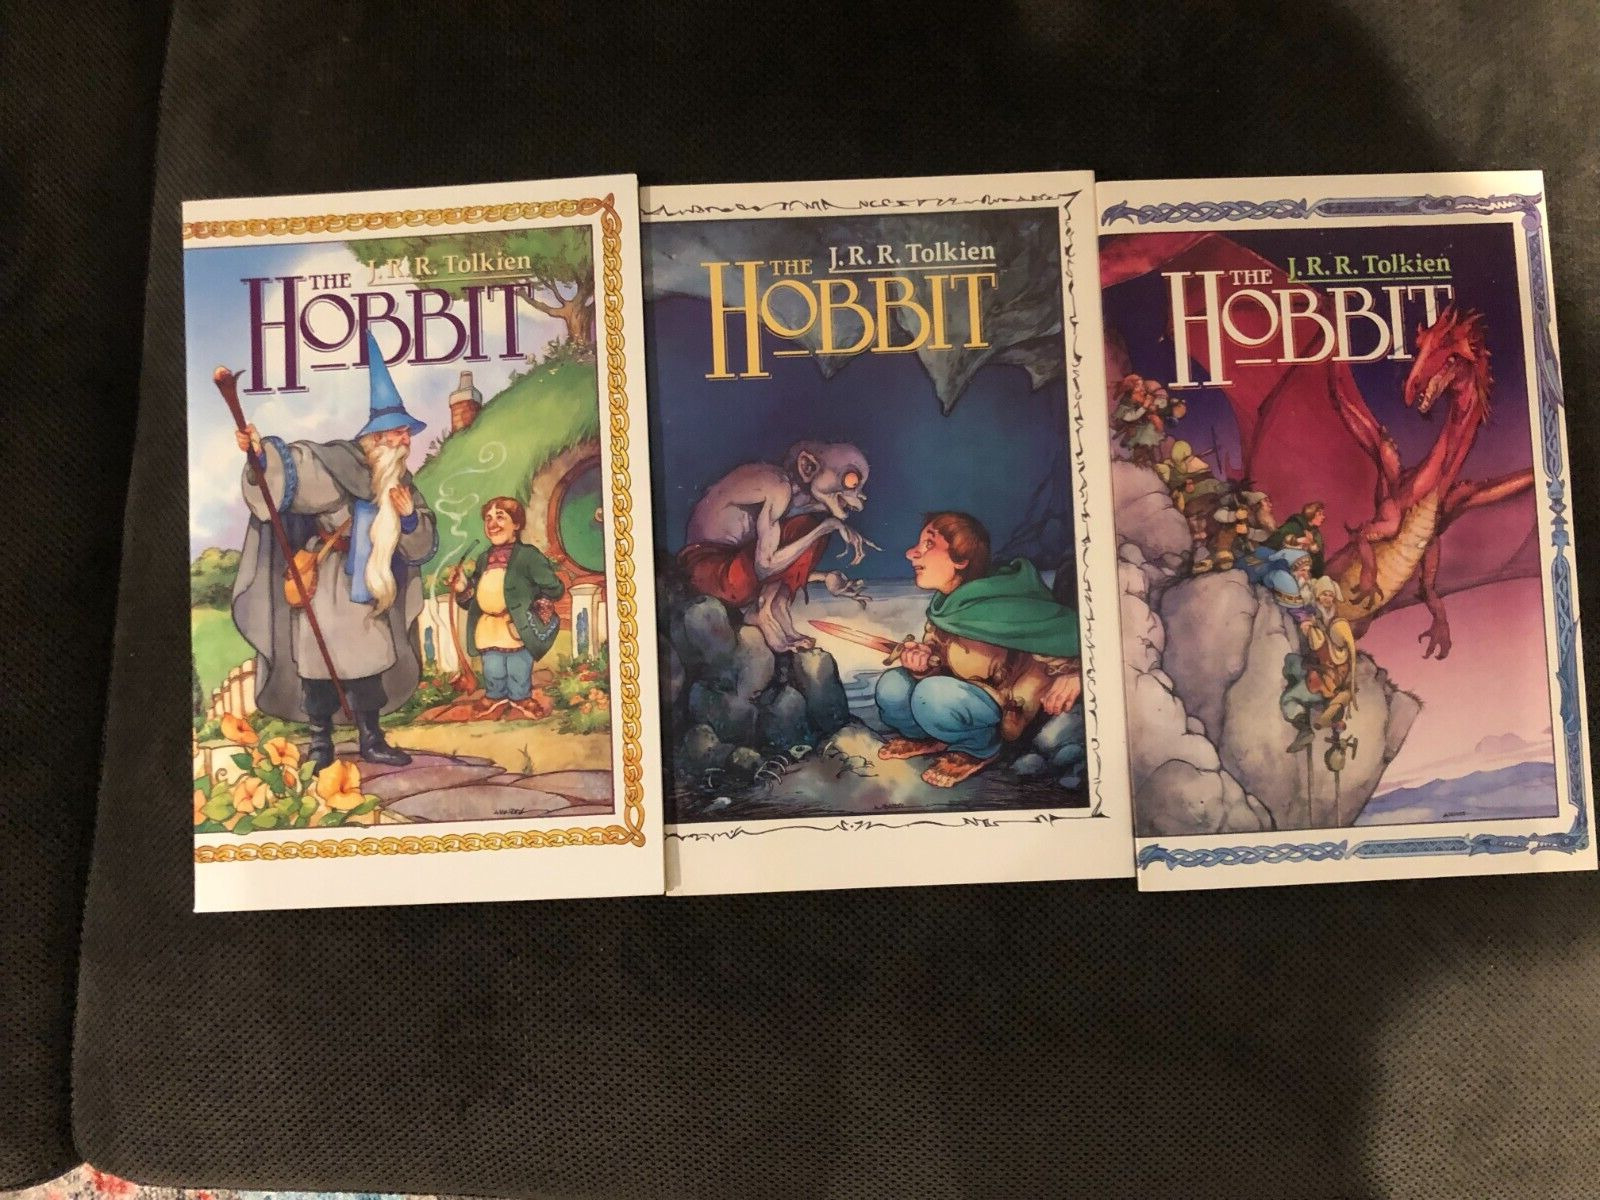 The Hobbit #1-3 Complete Set 1989 JRR TOLKIEN David Wenzel Eclipse Comics - NM 